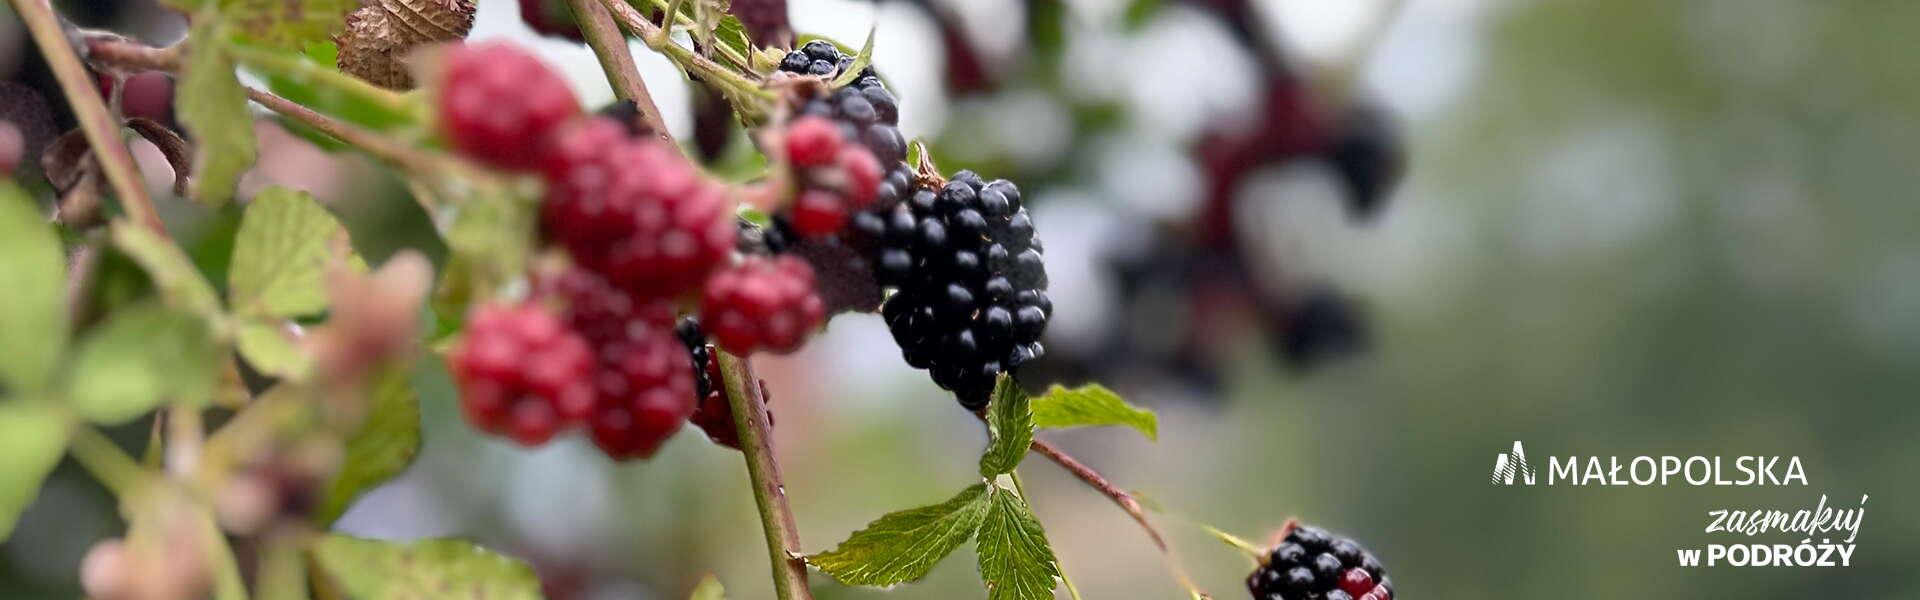 Blackberries and raspberries on branches; Małopolska logo in the bottom right corner and the inscription ‘Taste the journey’